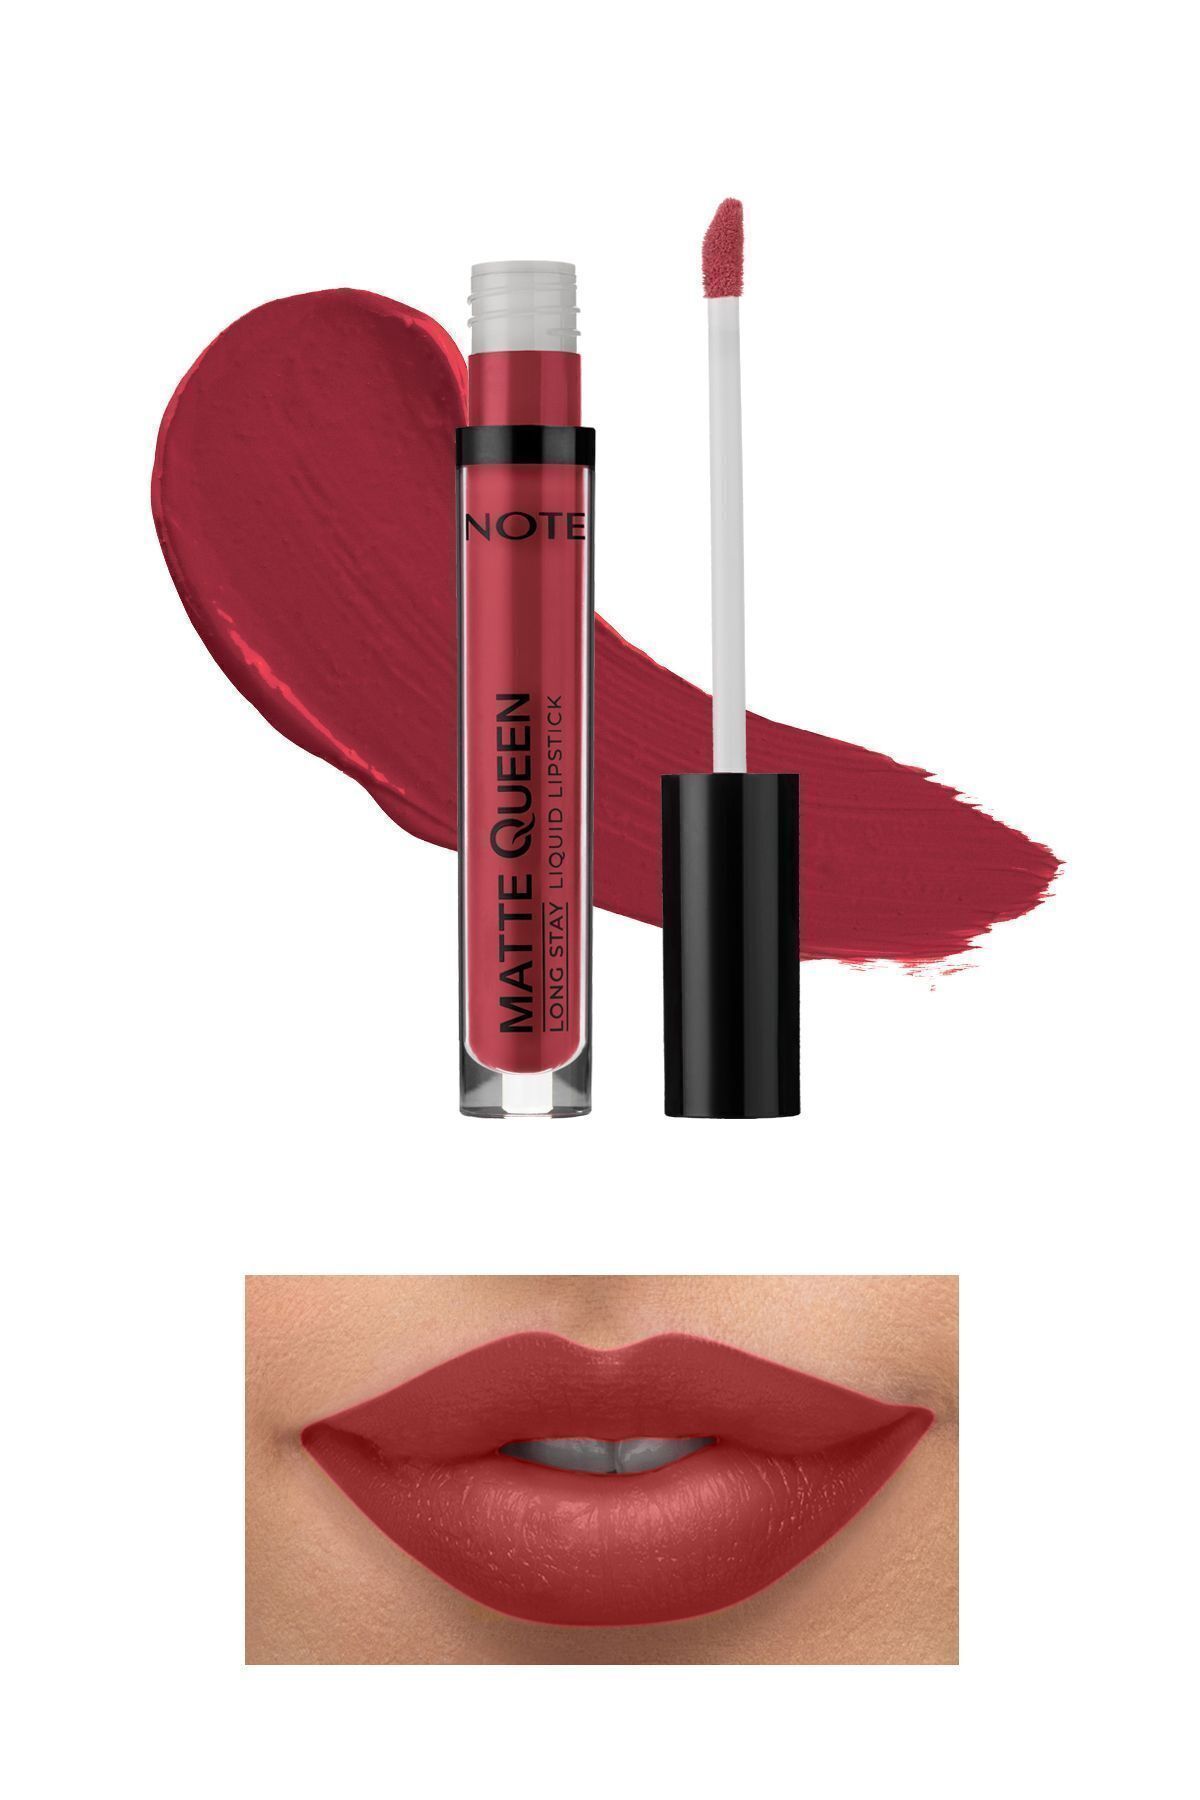 Note Cosmetics Matte Queen Lipstick Kalıcı Likit Ruj 13 Red Elegance - Kırmızı